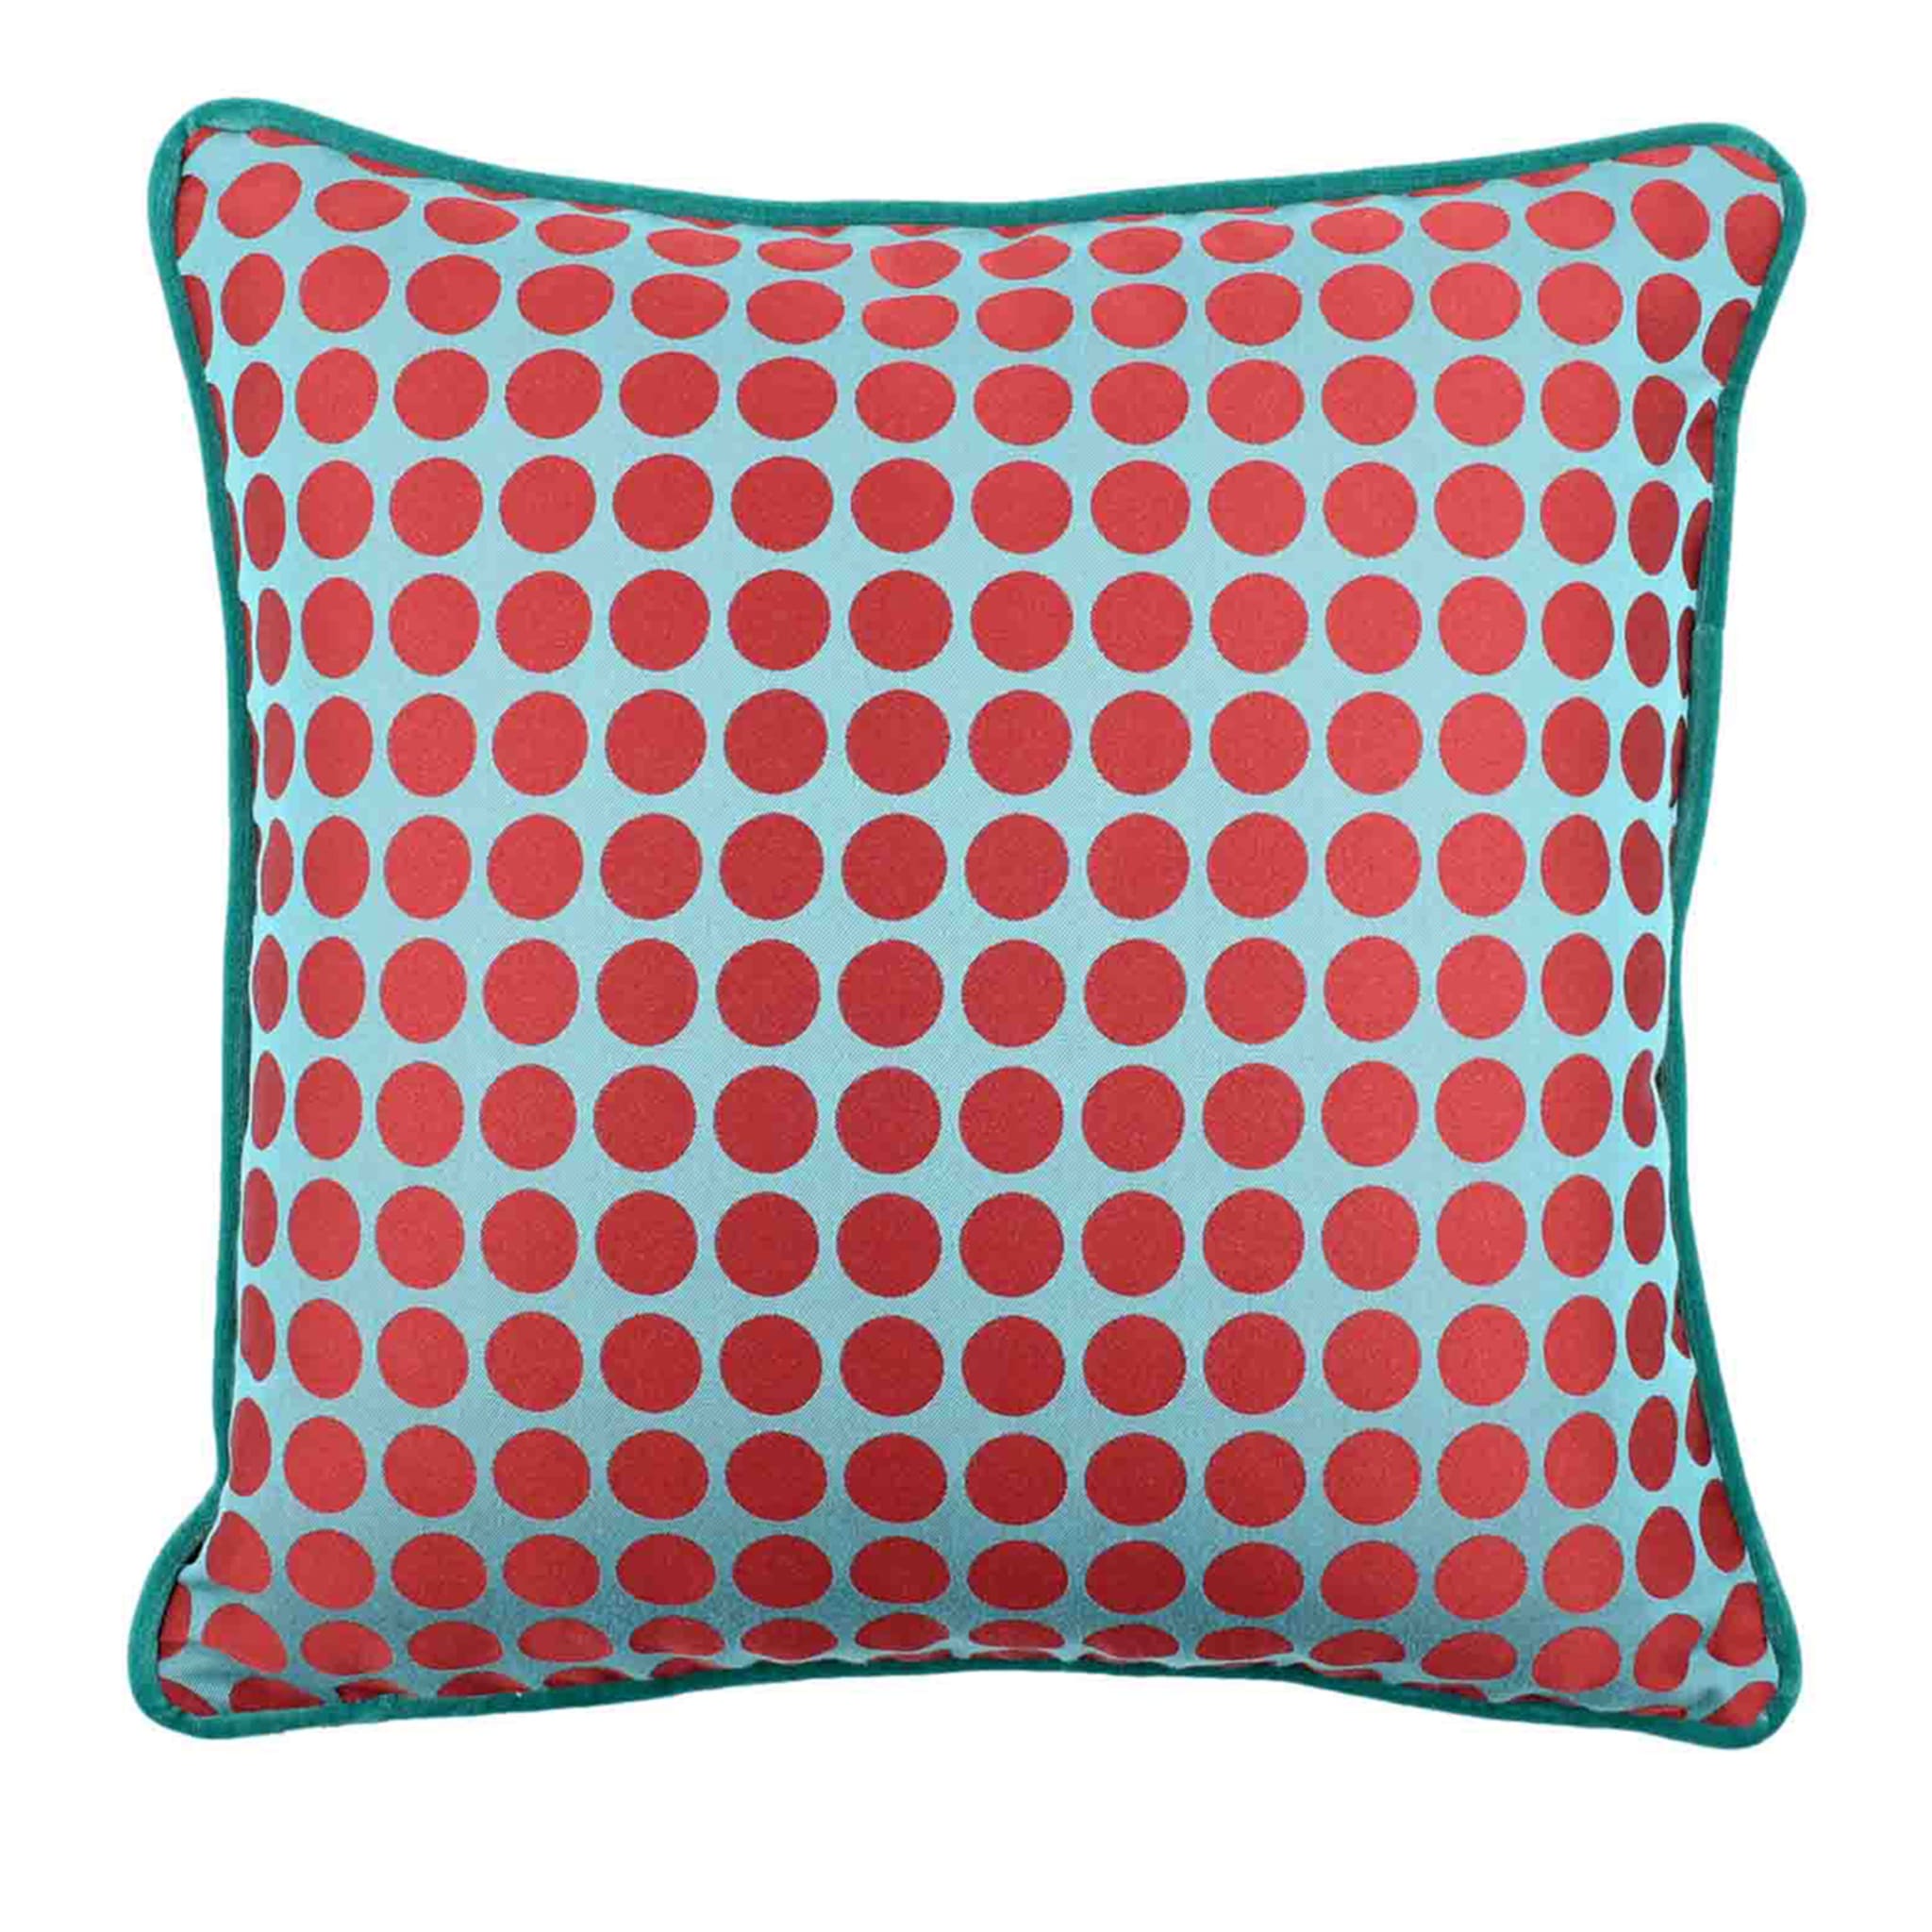 Light Blue and Red Carrè Cushion in polka dots jacquard fabric - Main view